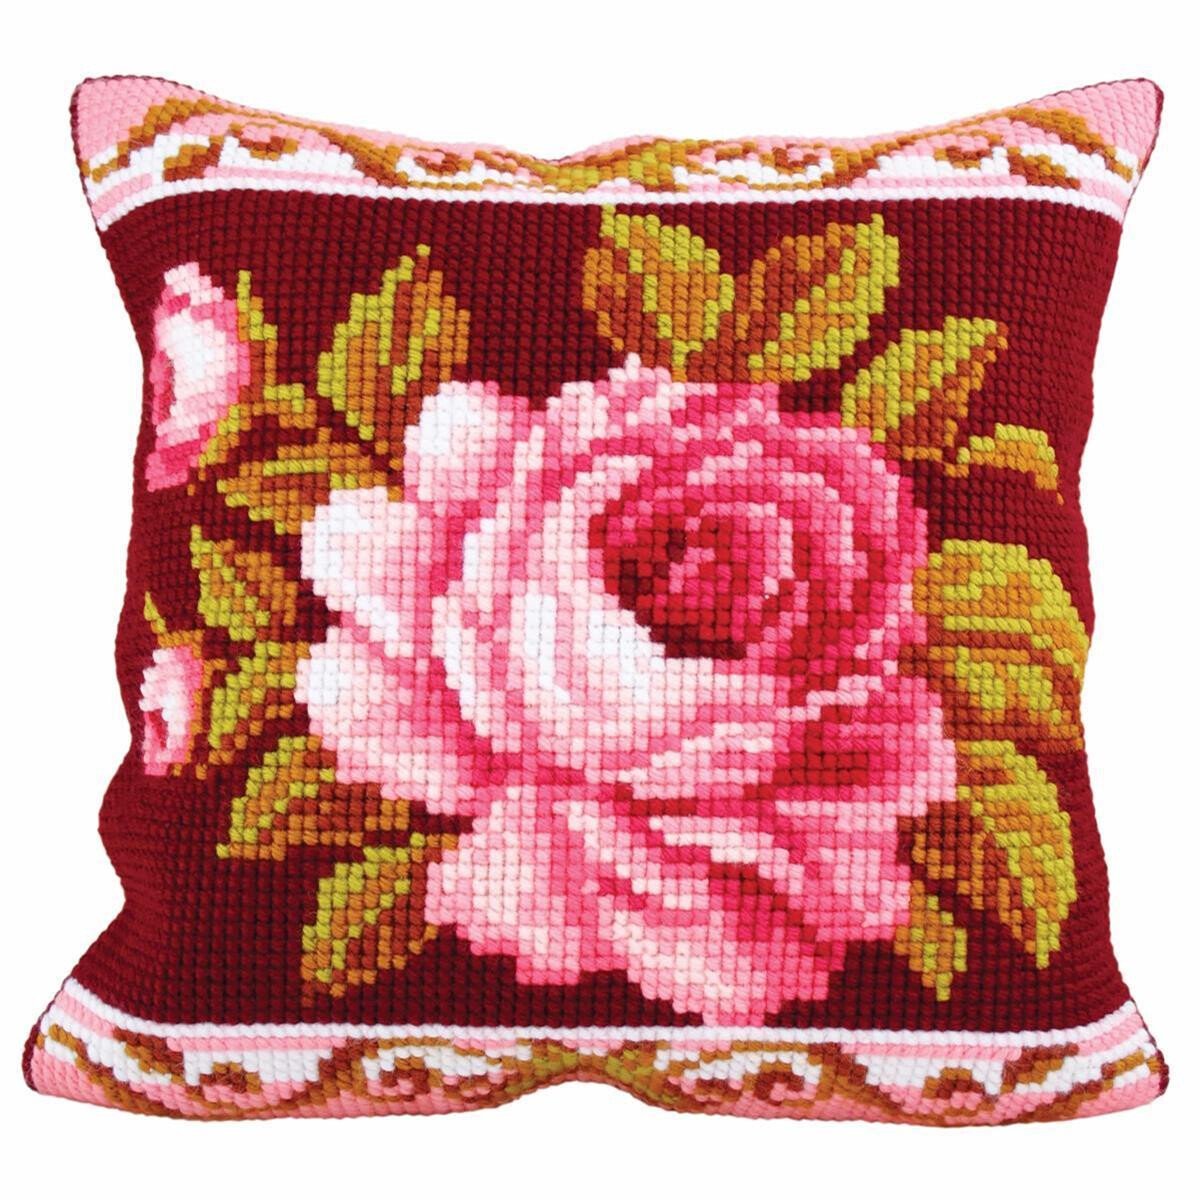 CdA stamped cross stitch kit cushion "Romantic Rose...